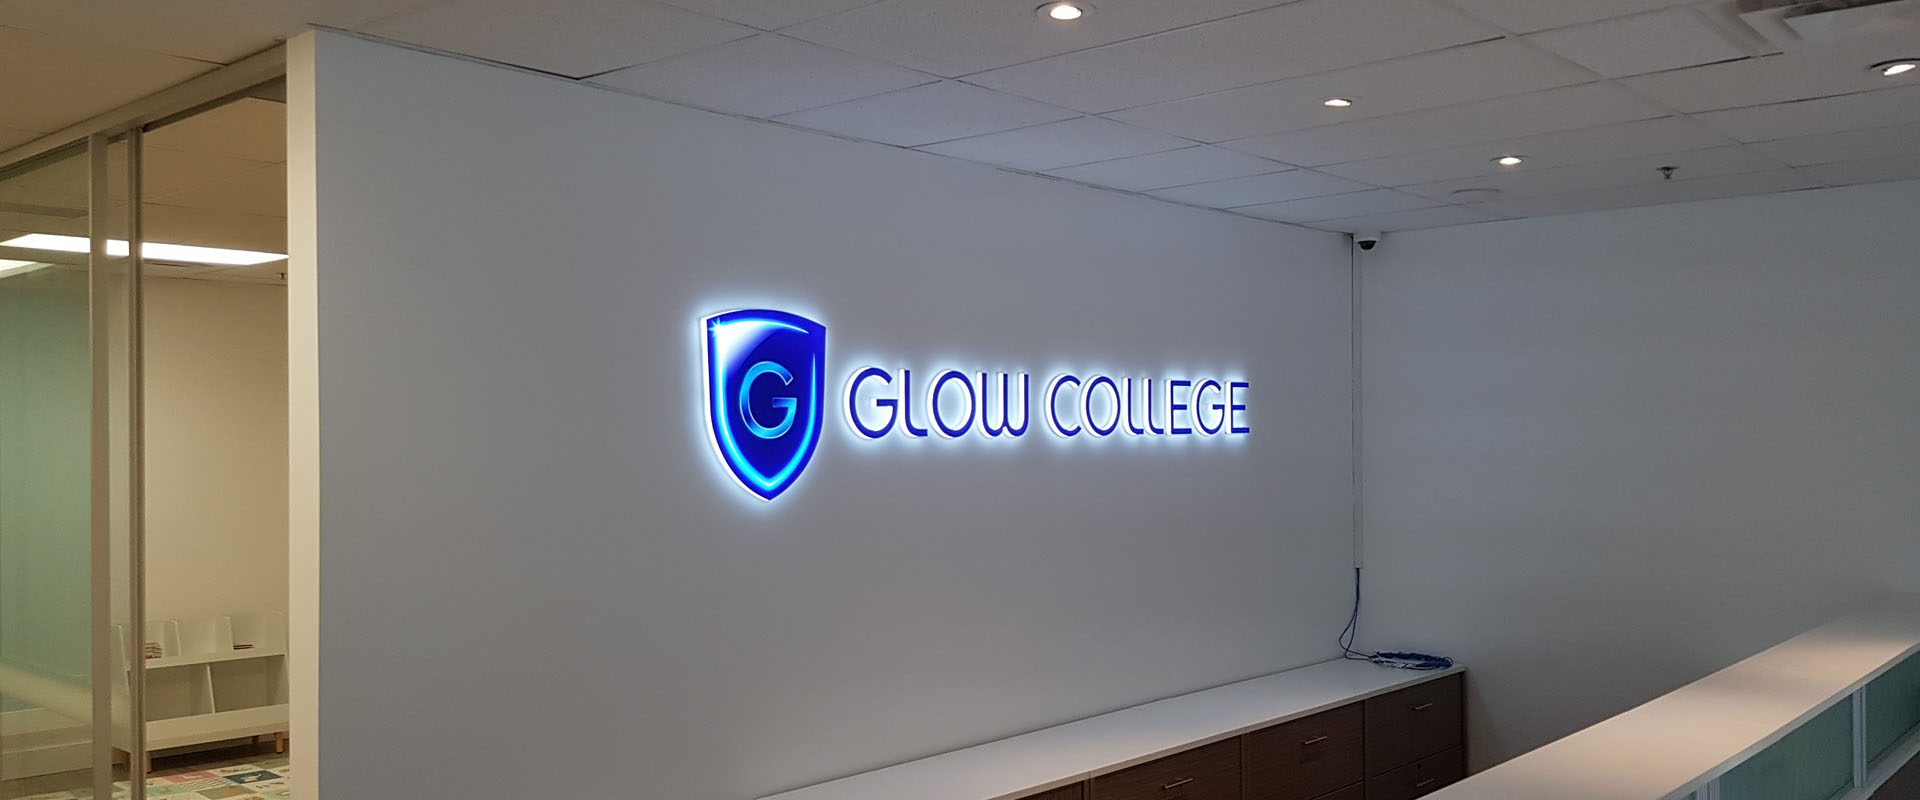 Glow College Illuminated acrylic letters